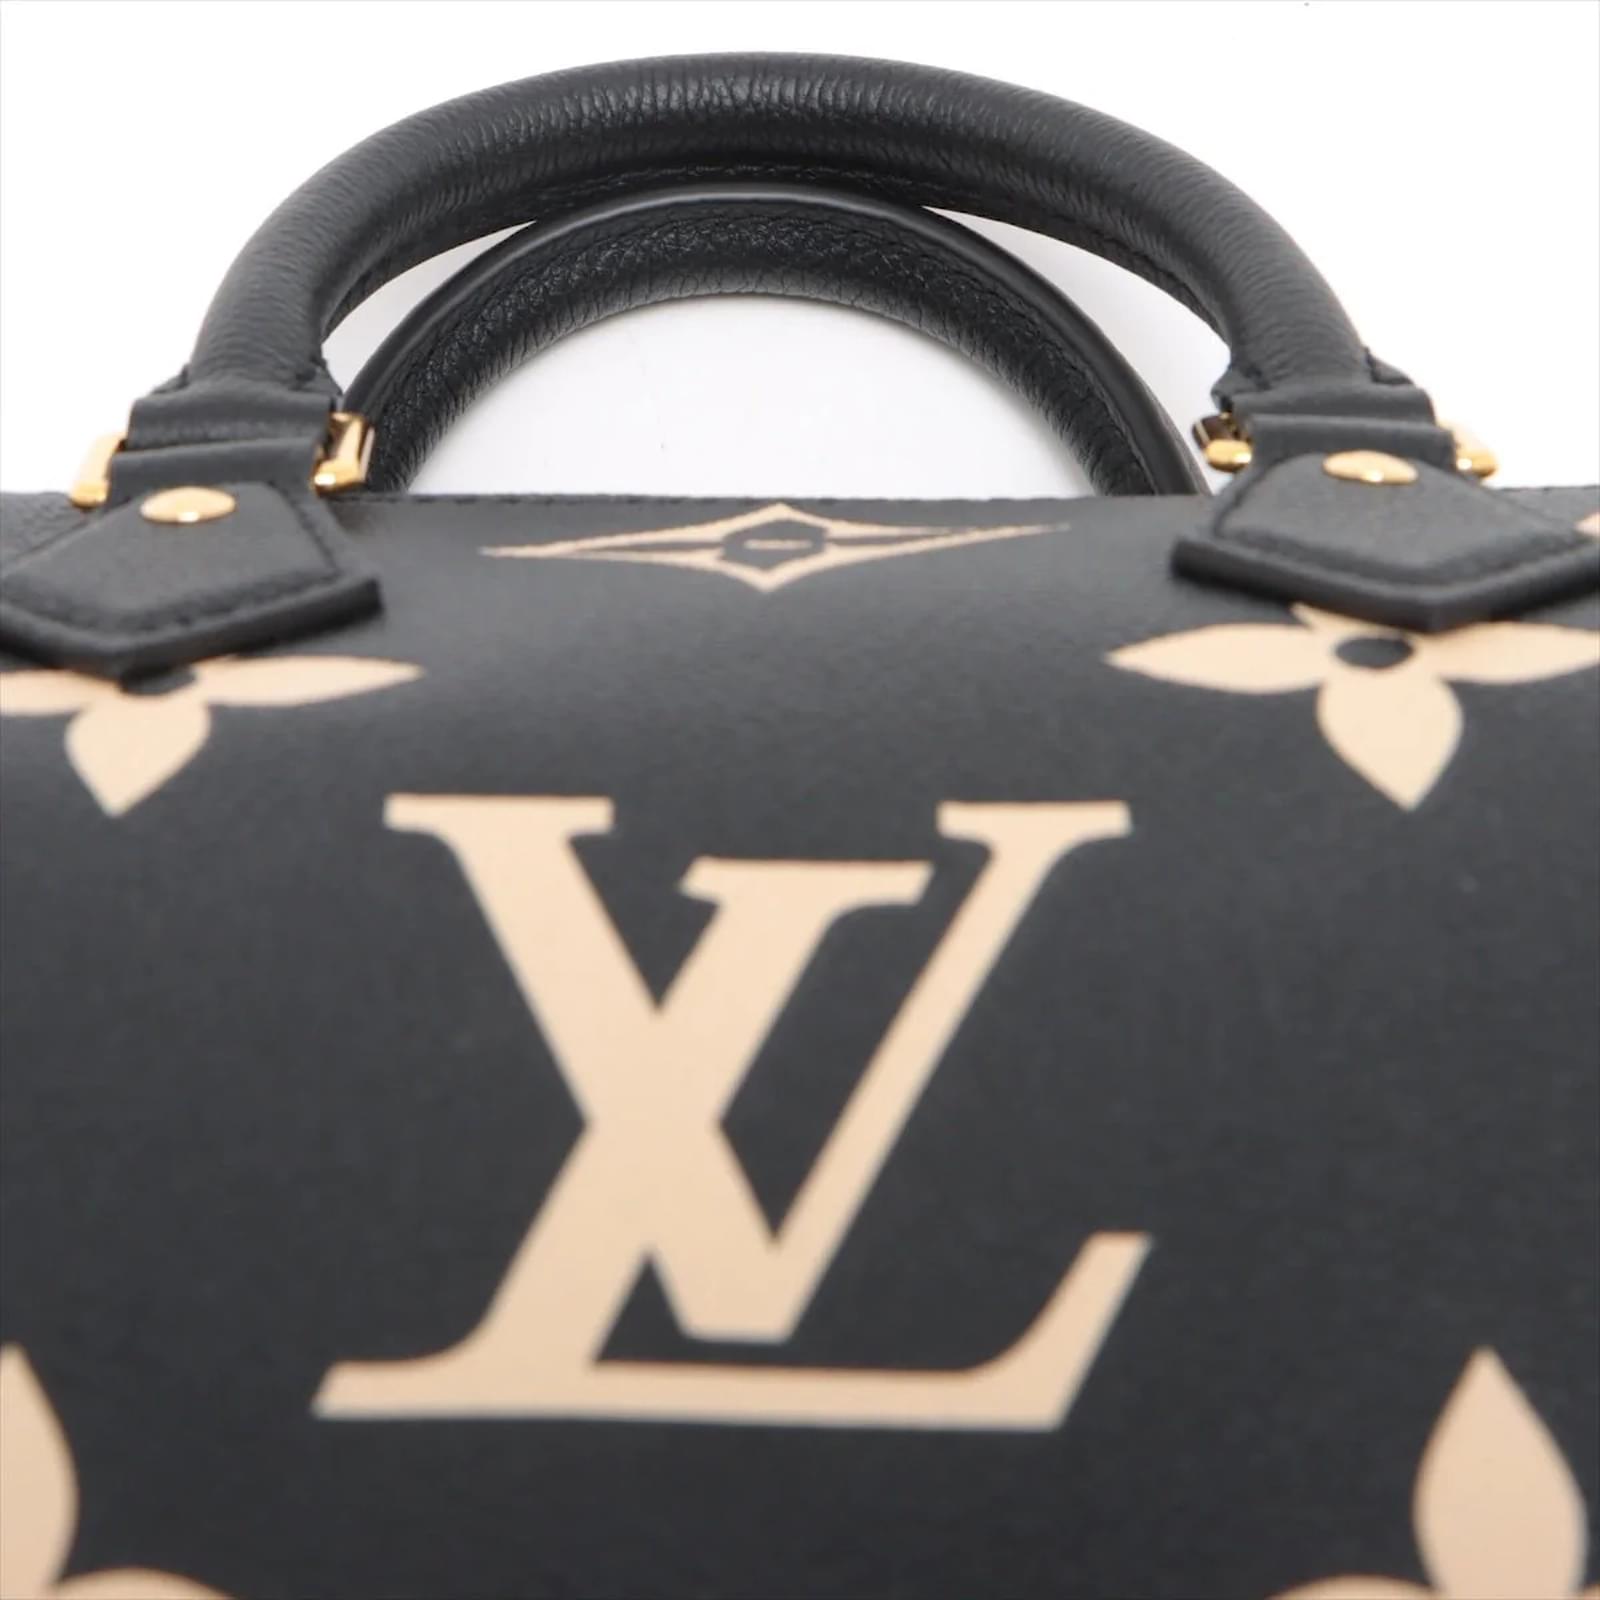 Louis Vuitton Speedy 25 Bandouliere Bag Bicolor Monogram Empreinte